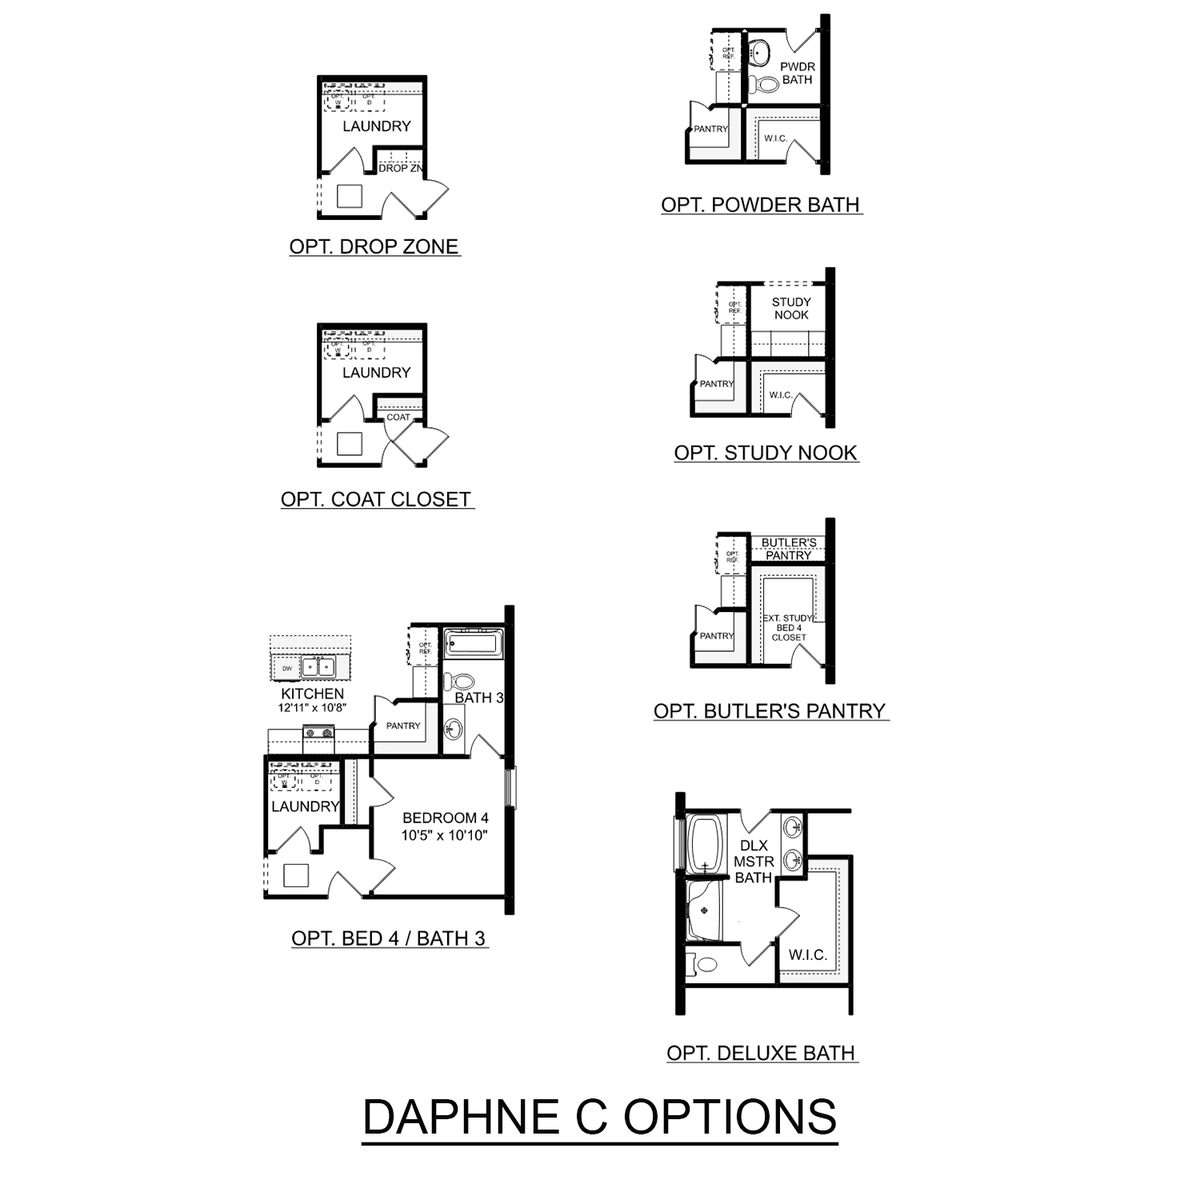 2 - The Daphne C floor plan layout for 133 Ivy Vine Drive in Davidson Homes' Ivy Hills community.